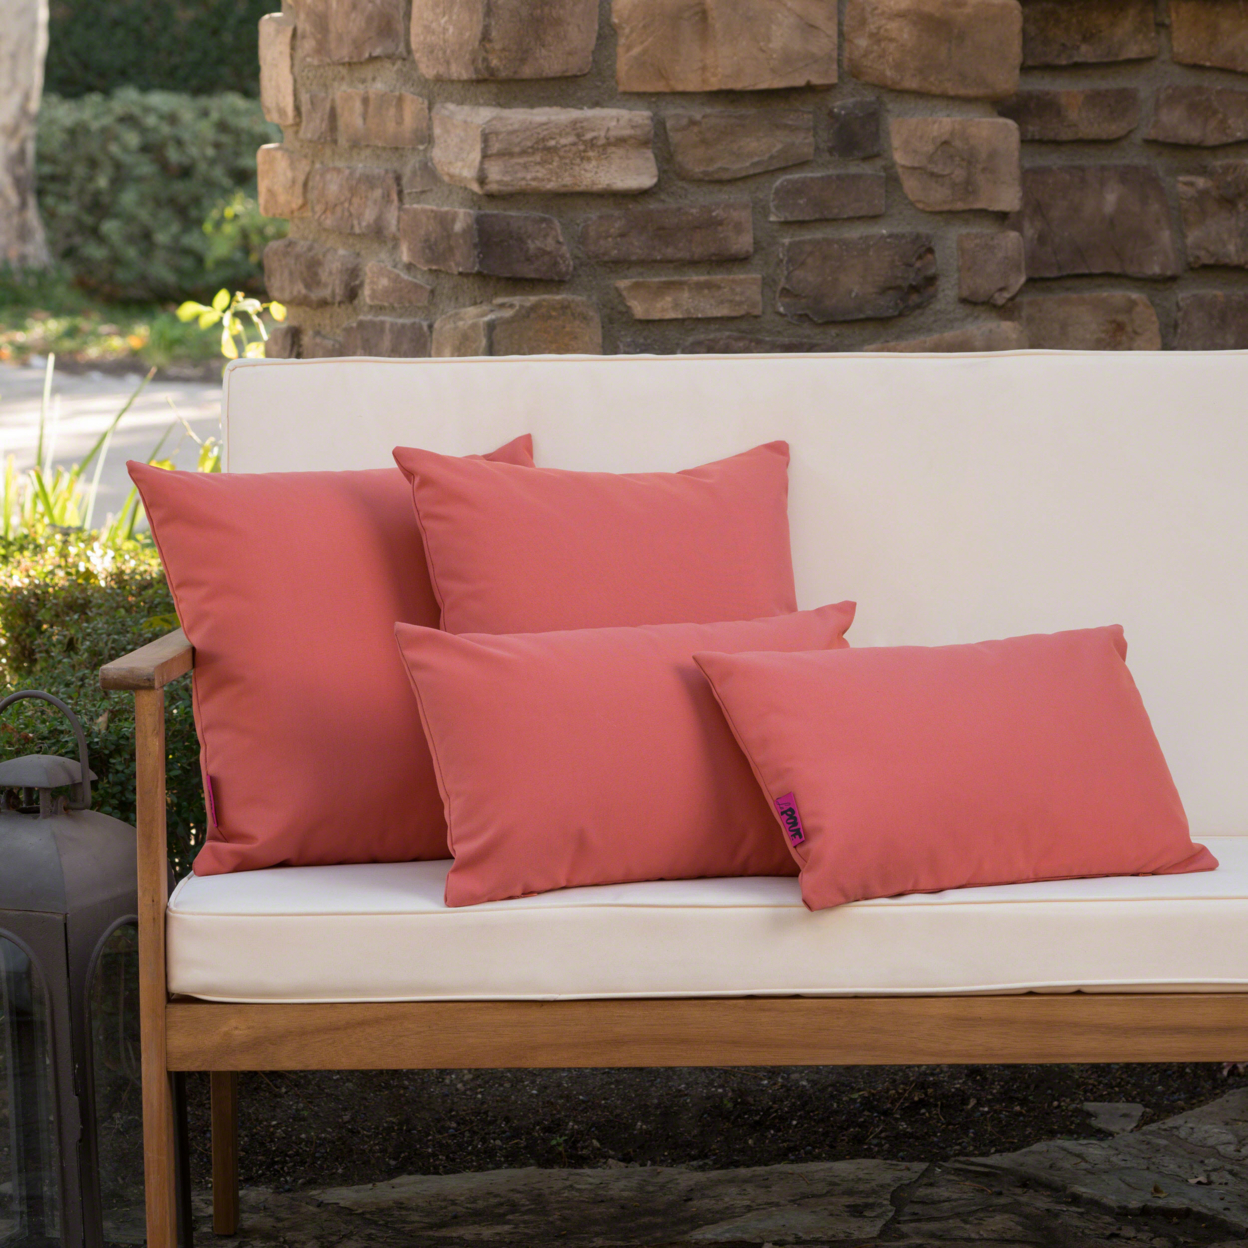 Coronado Outdoor Water Resistant Square And Rectangular Throw Pillows (Set Of 4) - Gray